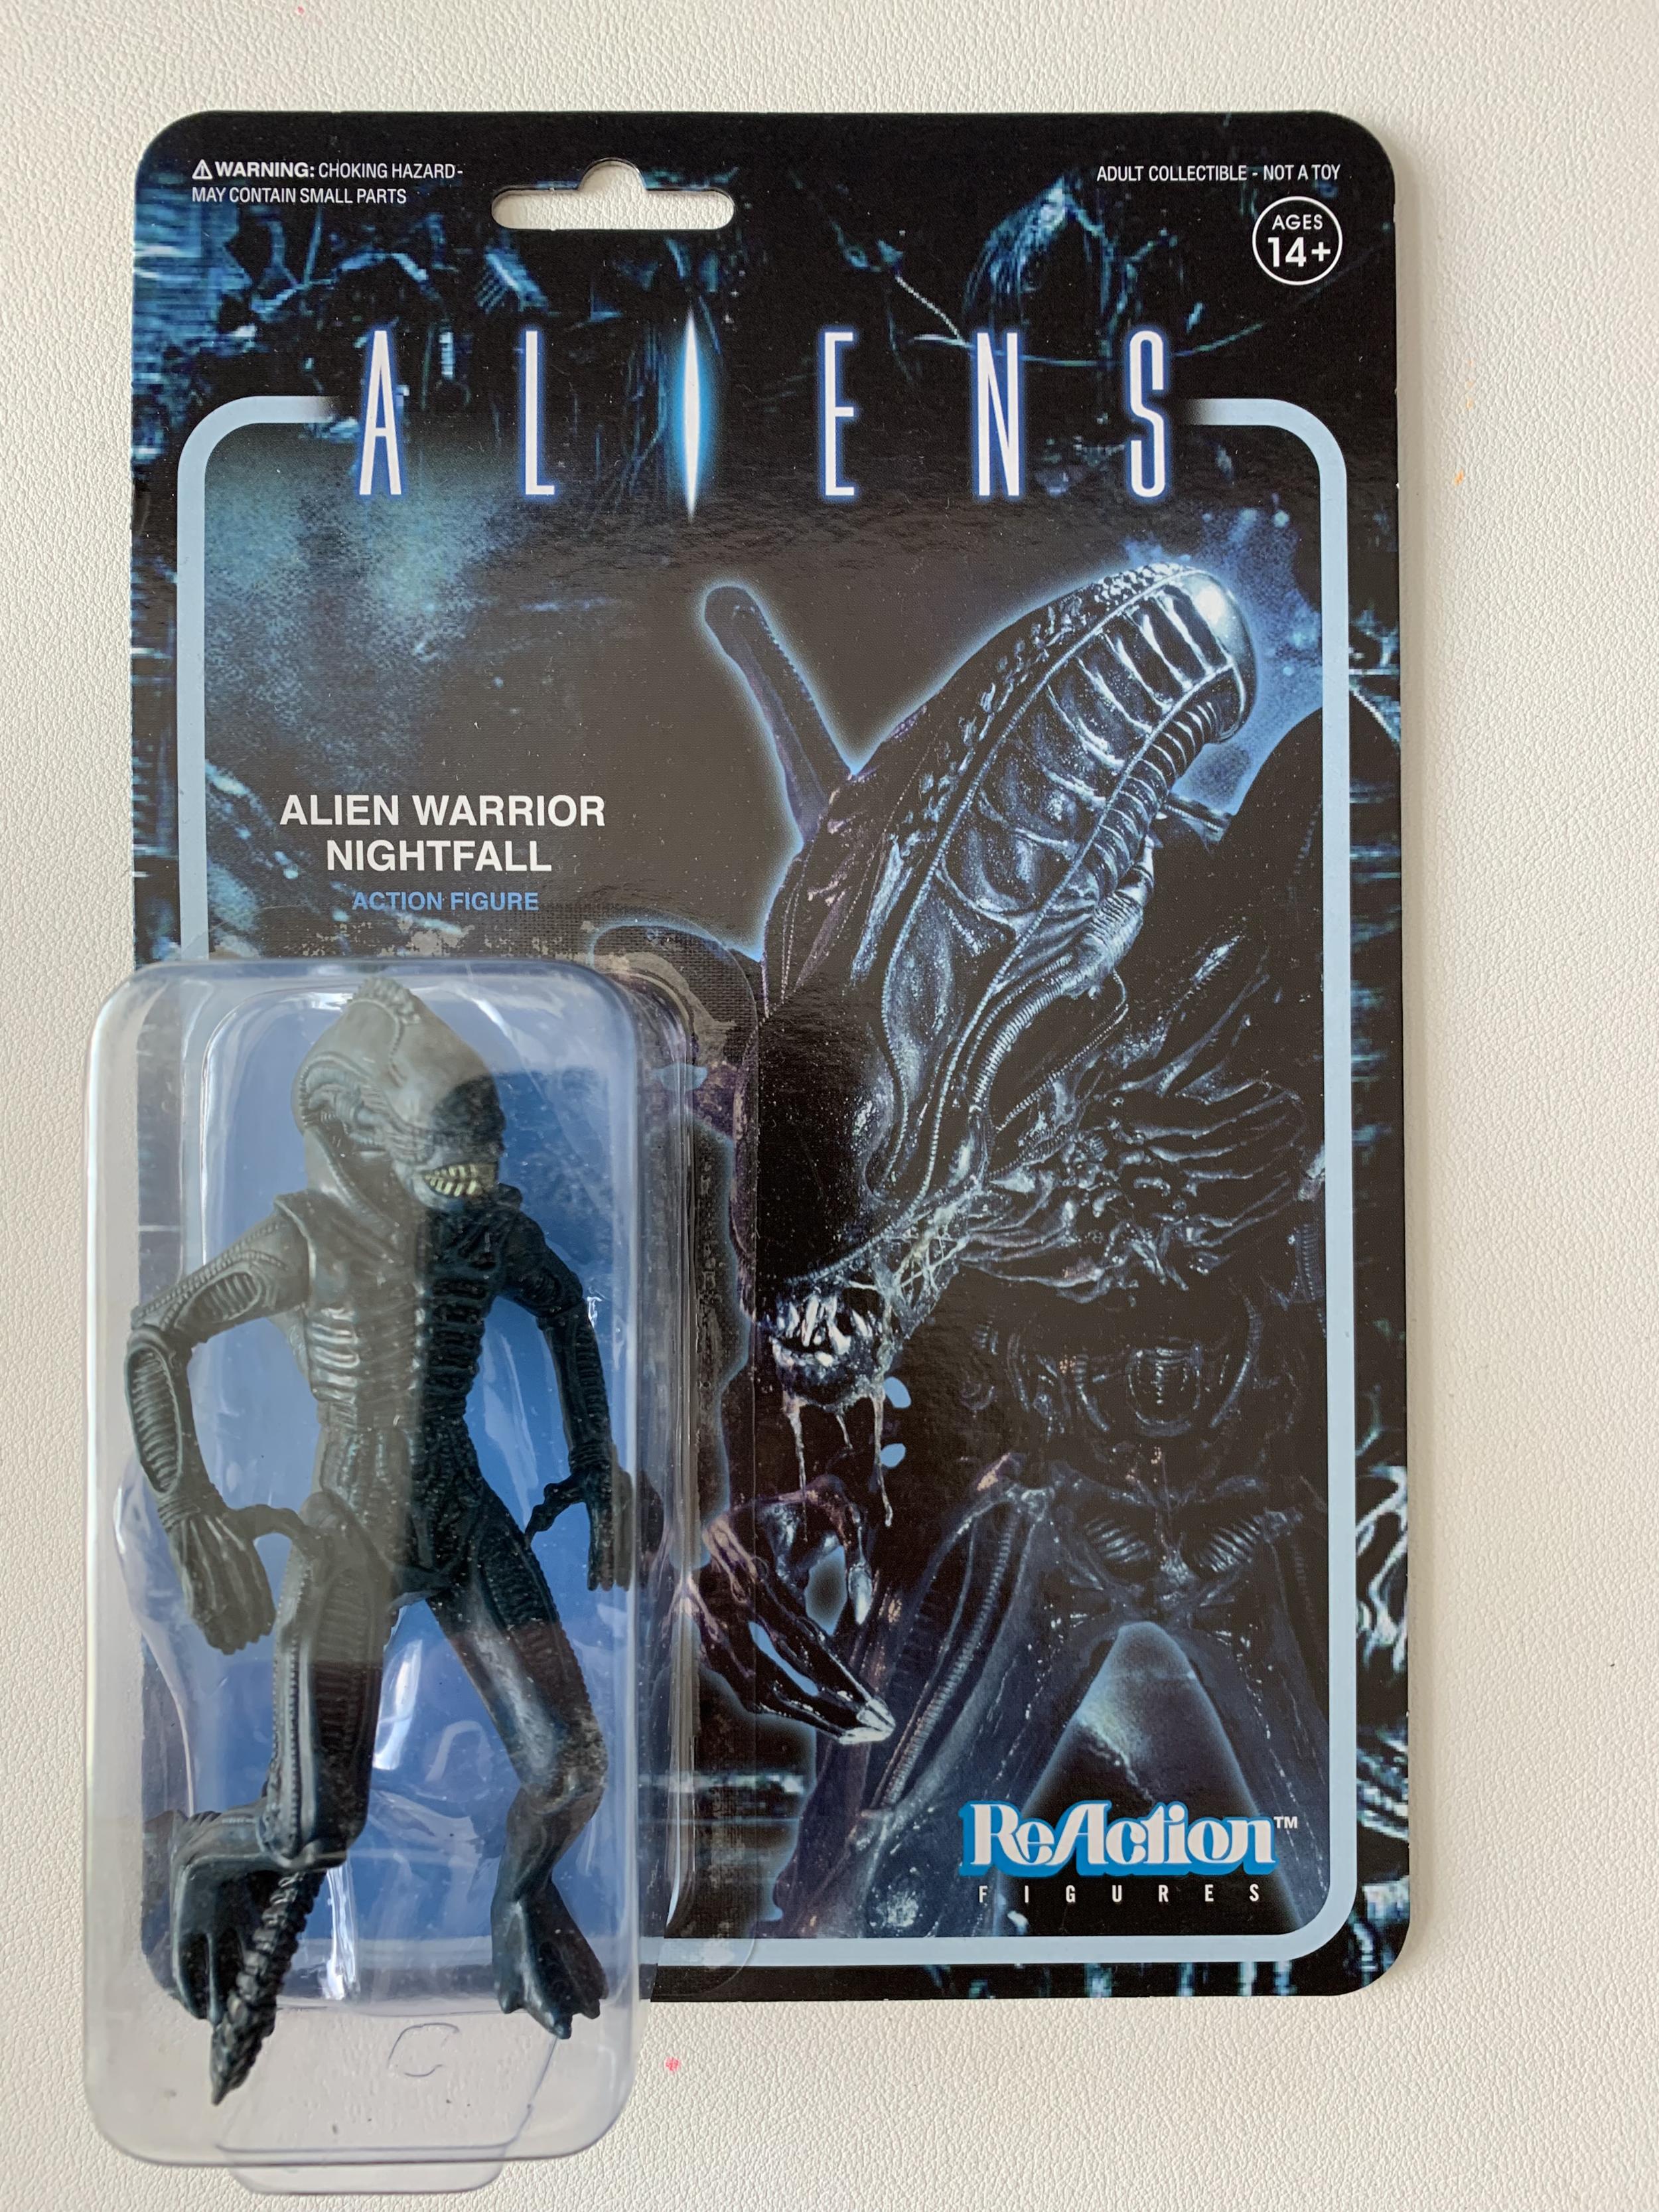 Alien Warrior Nightfall, ReAction Figure from the film ‘Aliens 2’ Super7, collectors model